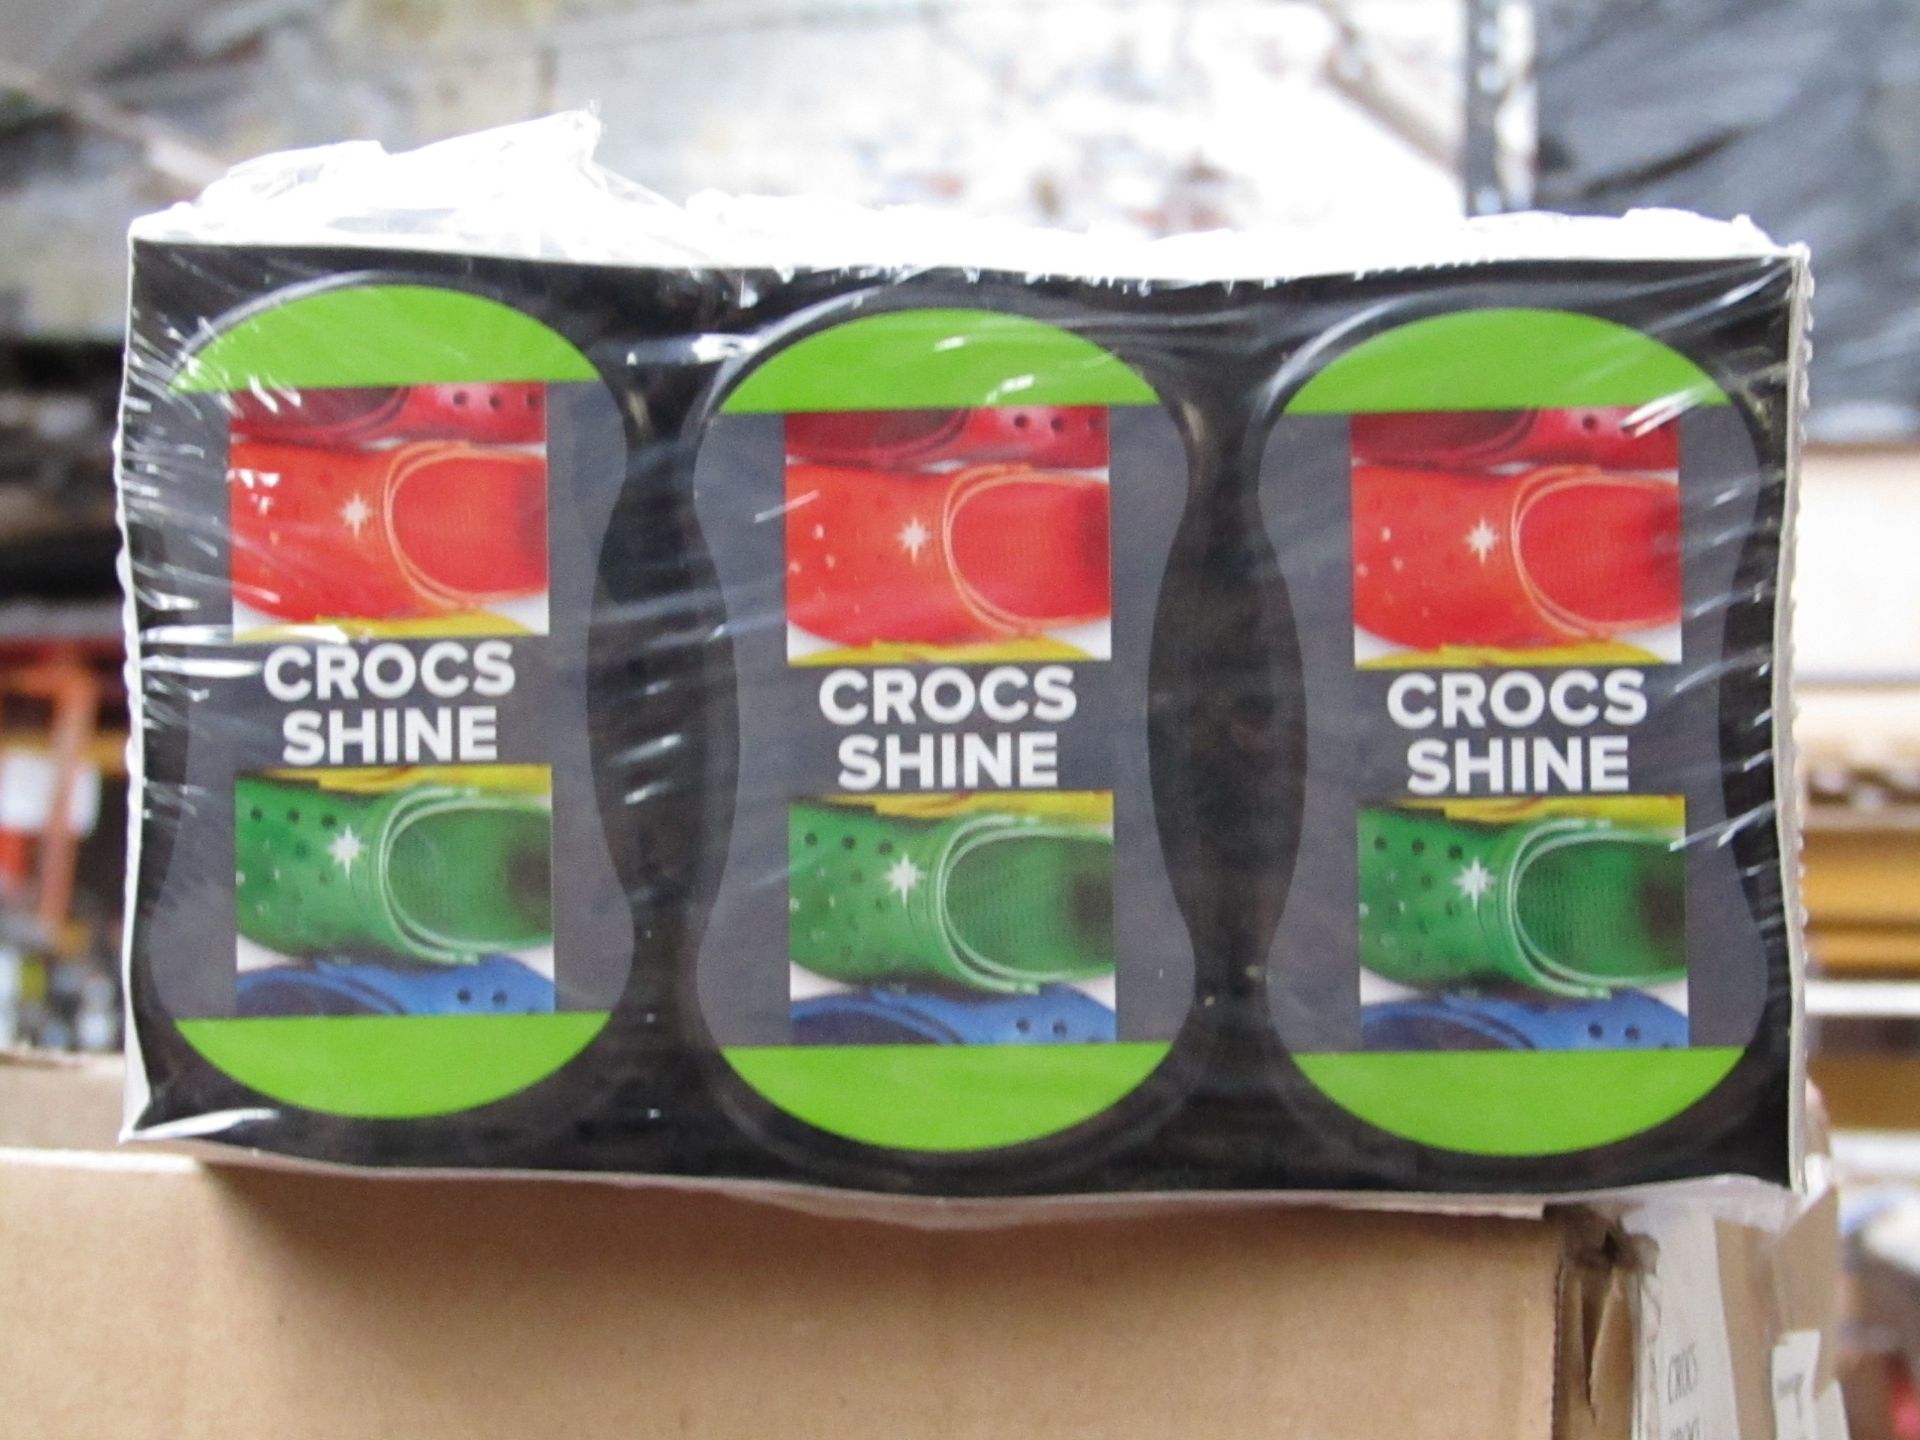 6 x packs of 6 Crocs Shine Shoe Buffers, new & packaged